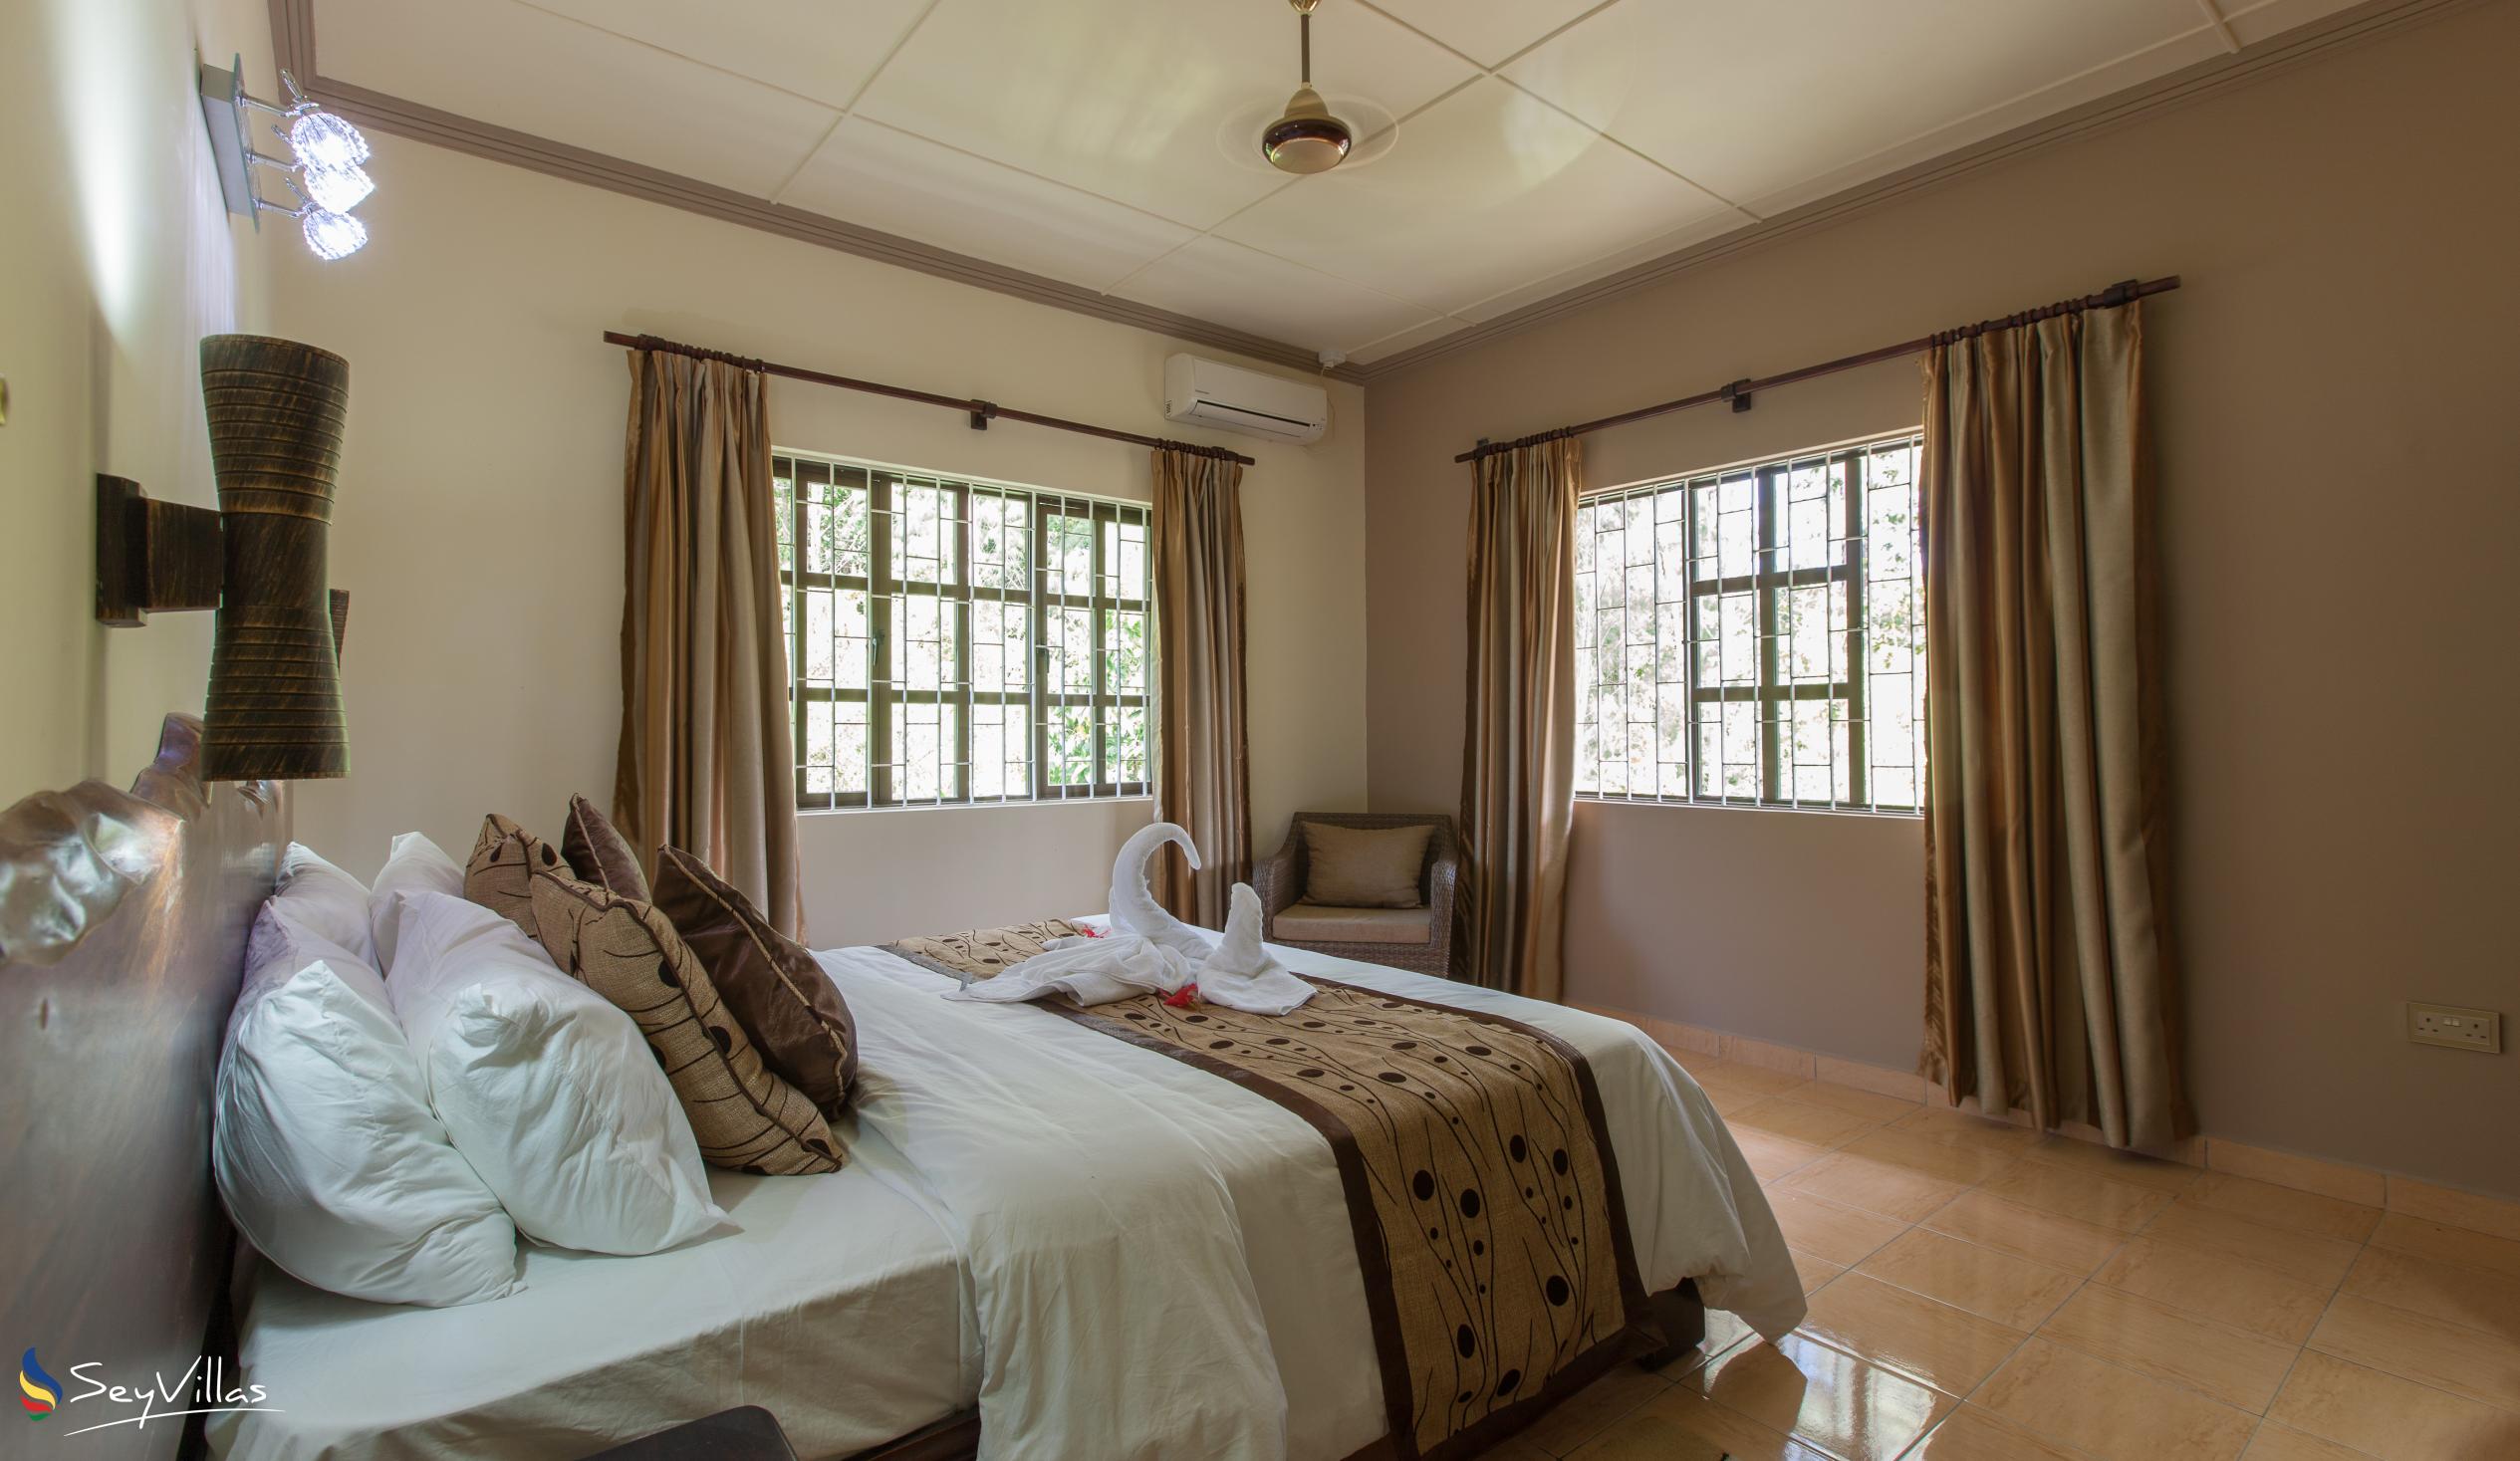 Foto 48: Chez Bea Villa - Appartement 2 chambres - Praslin (Seychelles)